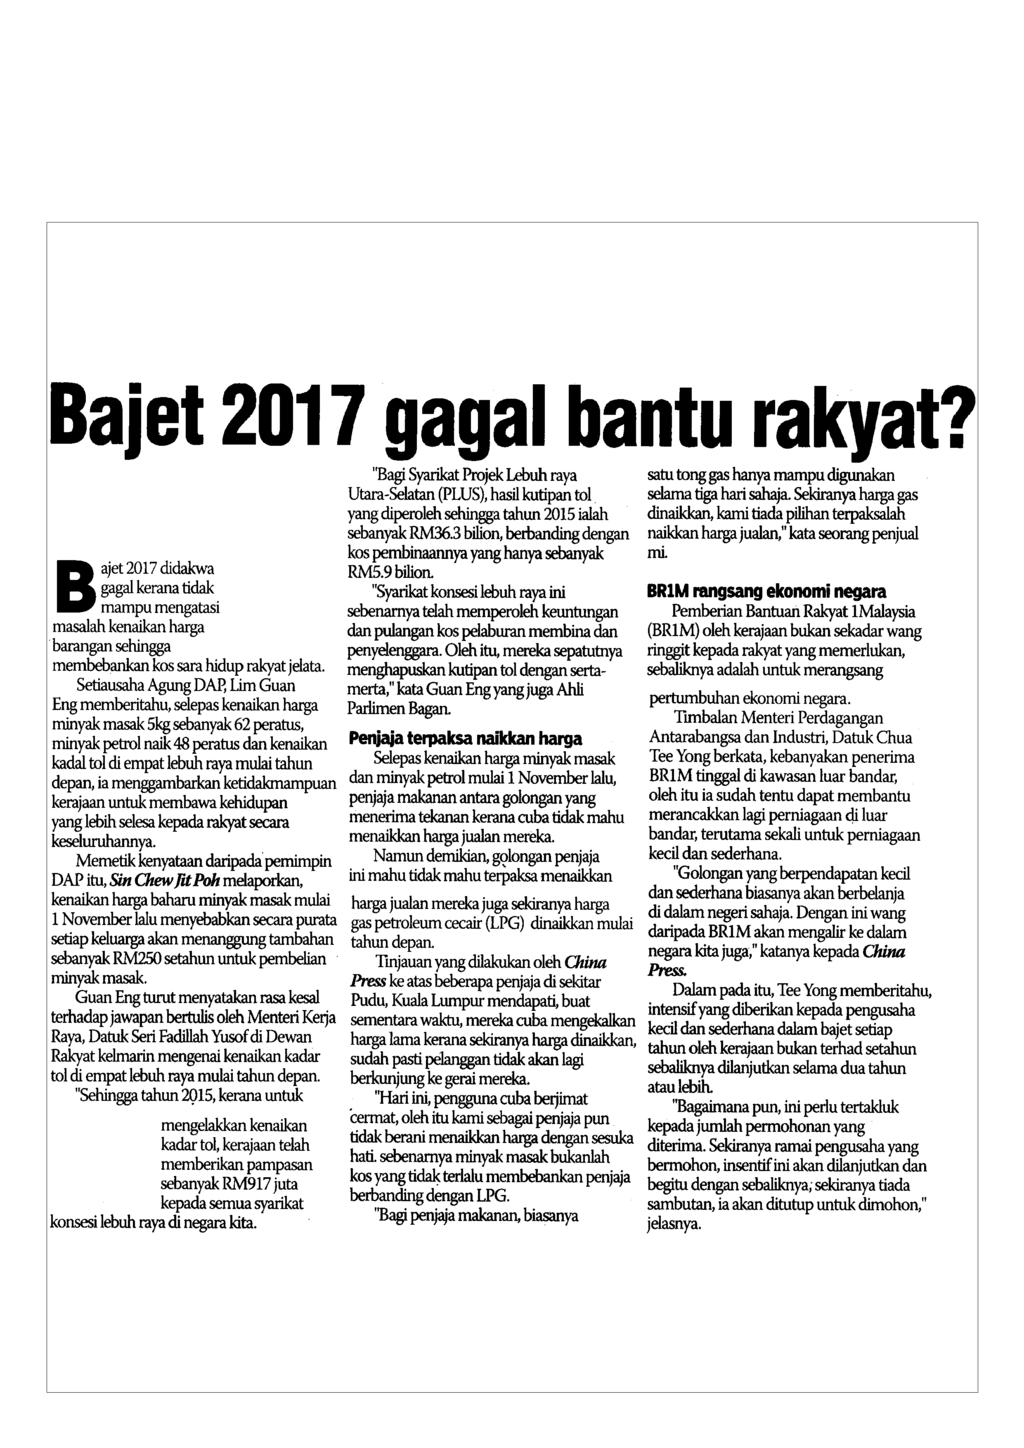 Headline Bajet 2017 gagal bantu rakyat MediaTitle Sinar Harian Section Nasional Circulation 279,000 Page No 12 Readership 837,000 Language Malay ArticleSize 300 cm² Journalist N/A AdValue RM 5,117